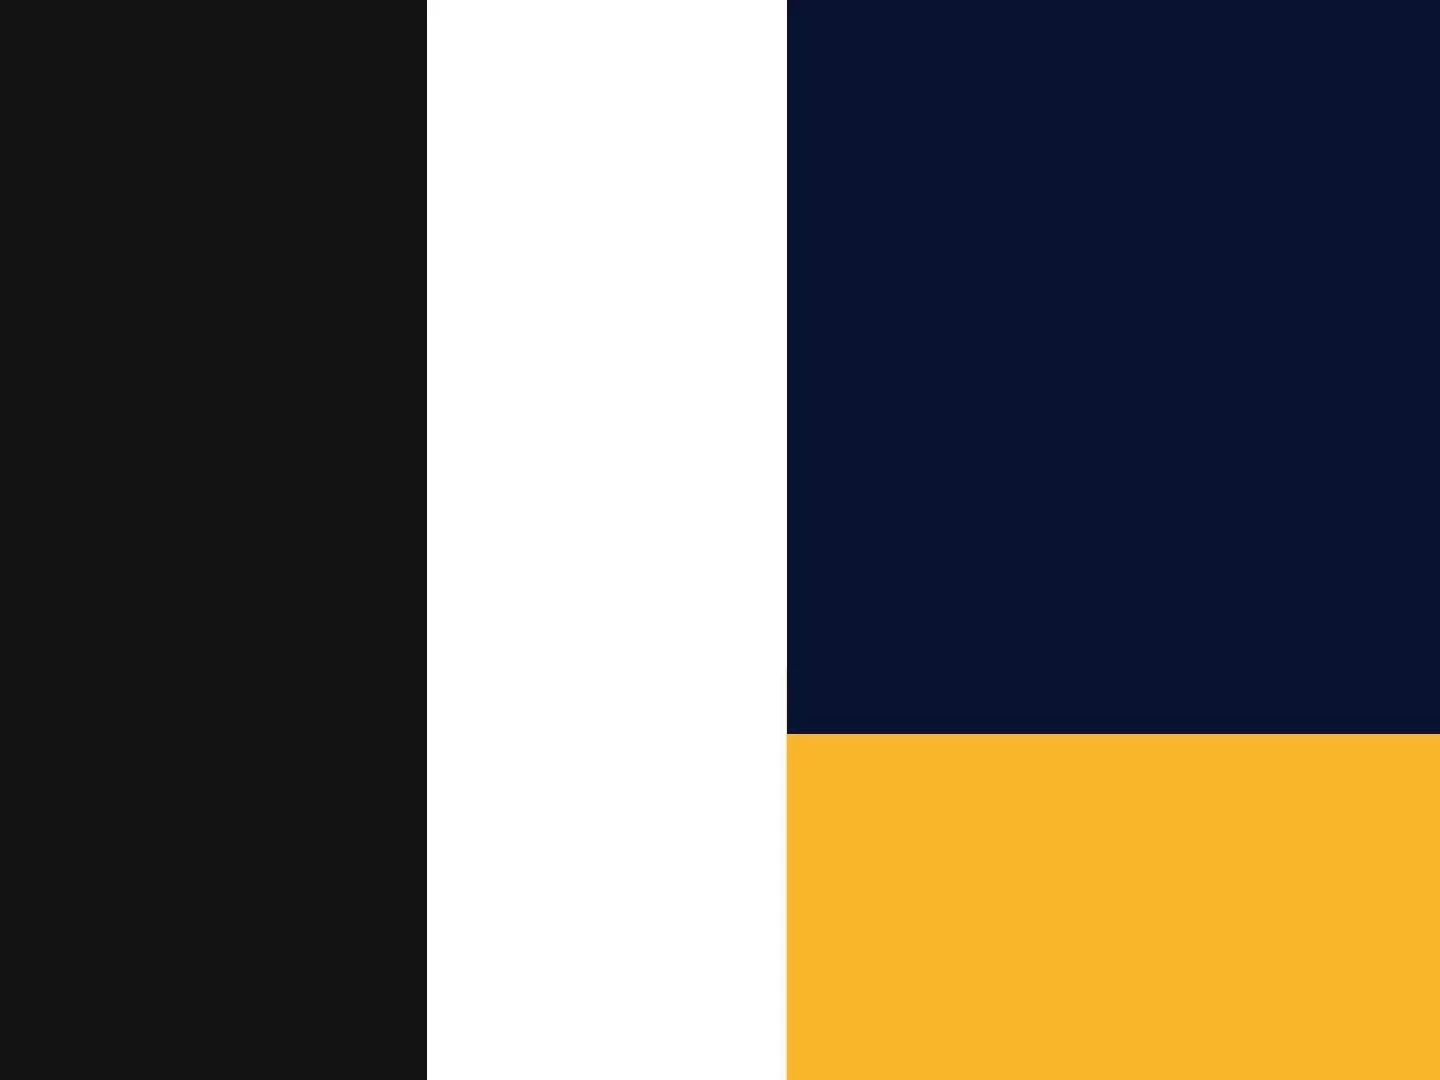 Scandinavian Pile Driving ABs profilfärger: gul, blå, mörkgrå och vit.